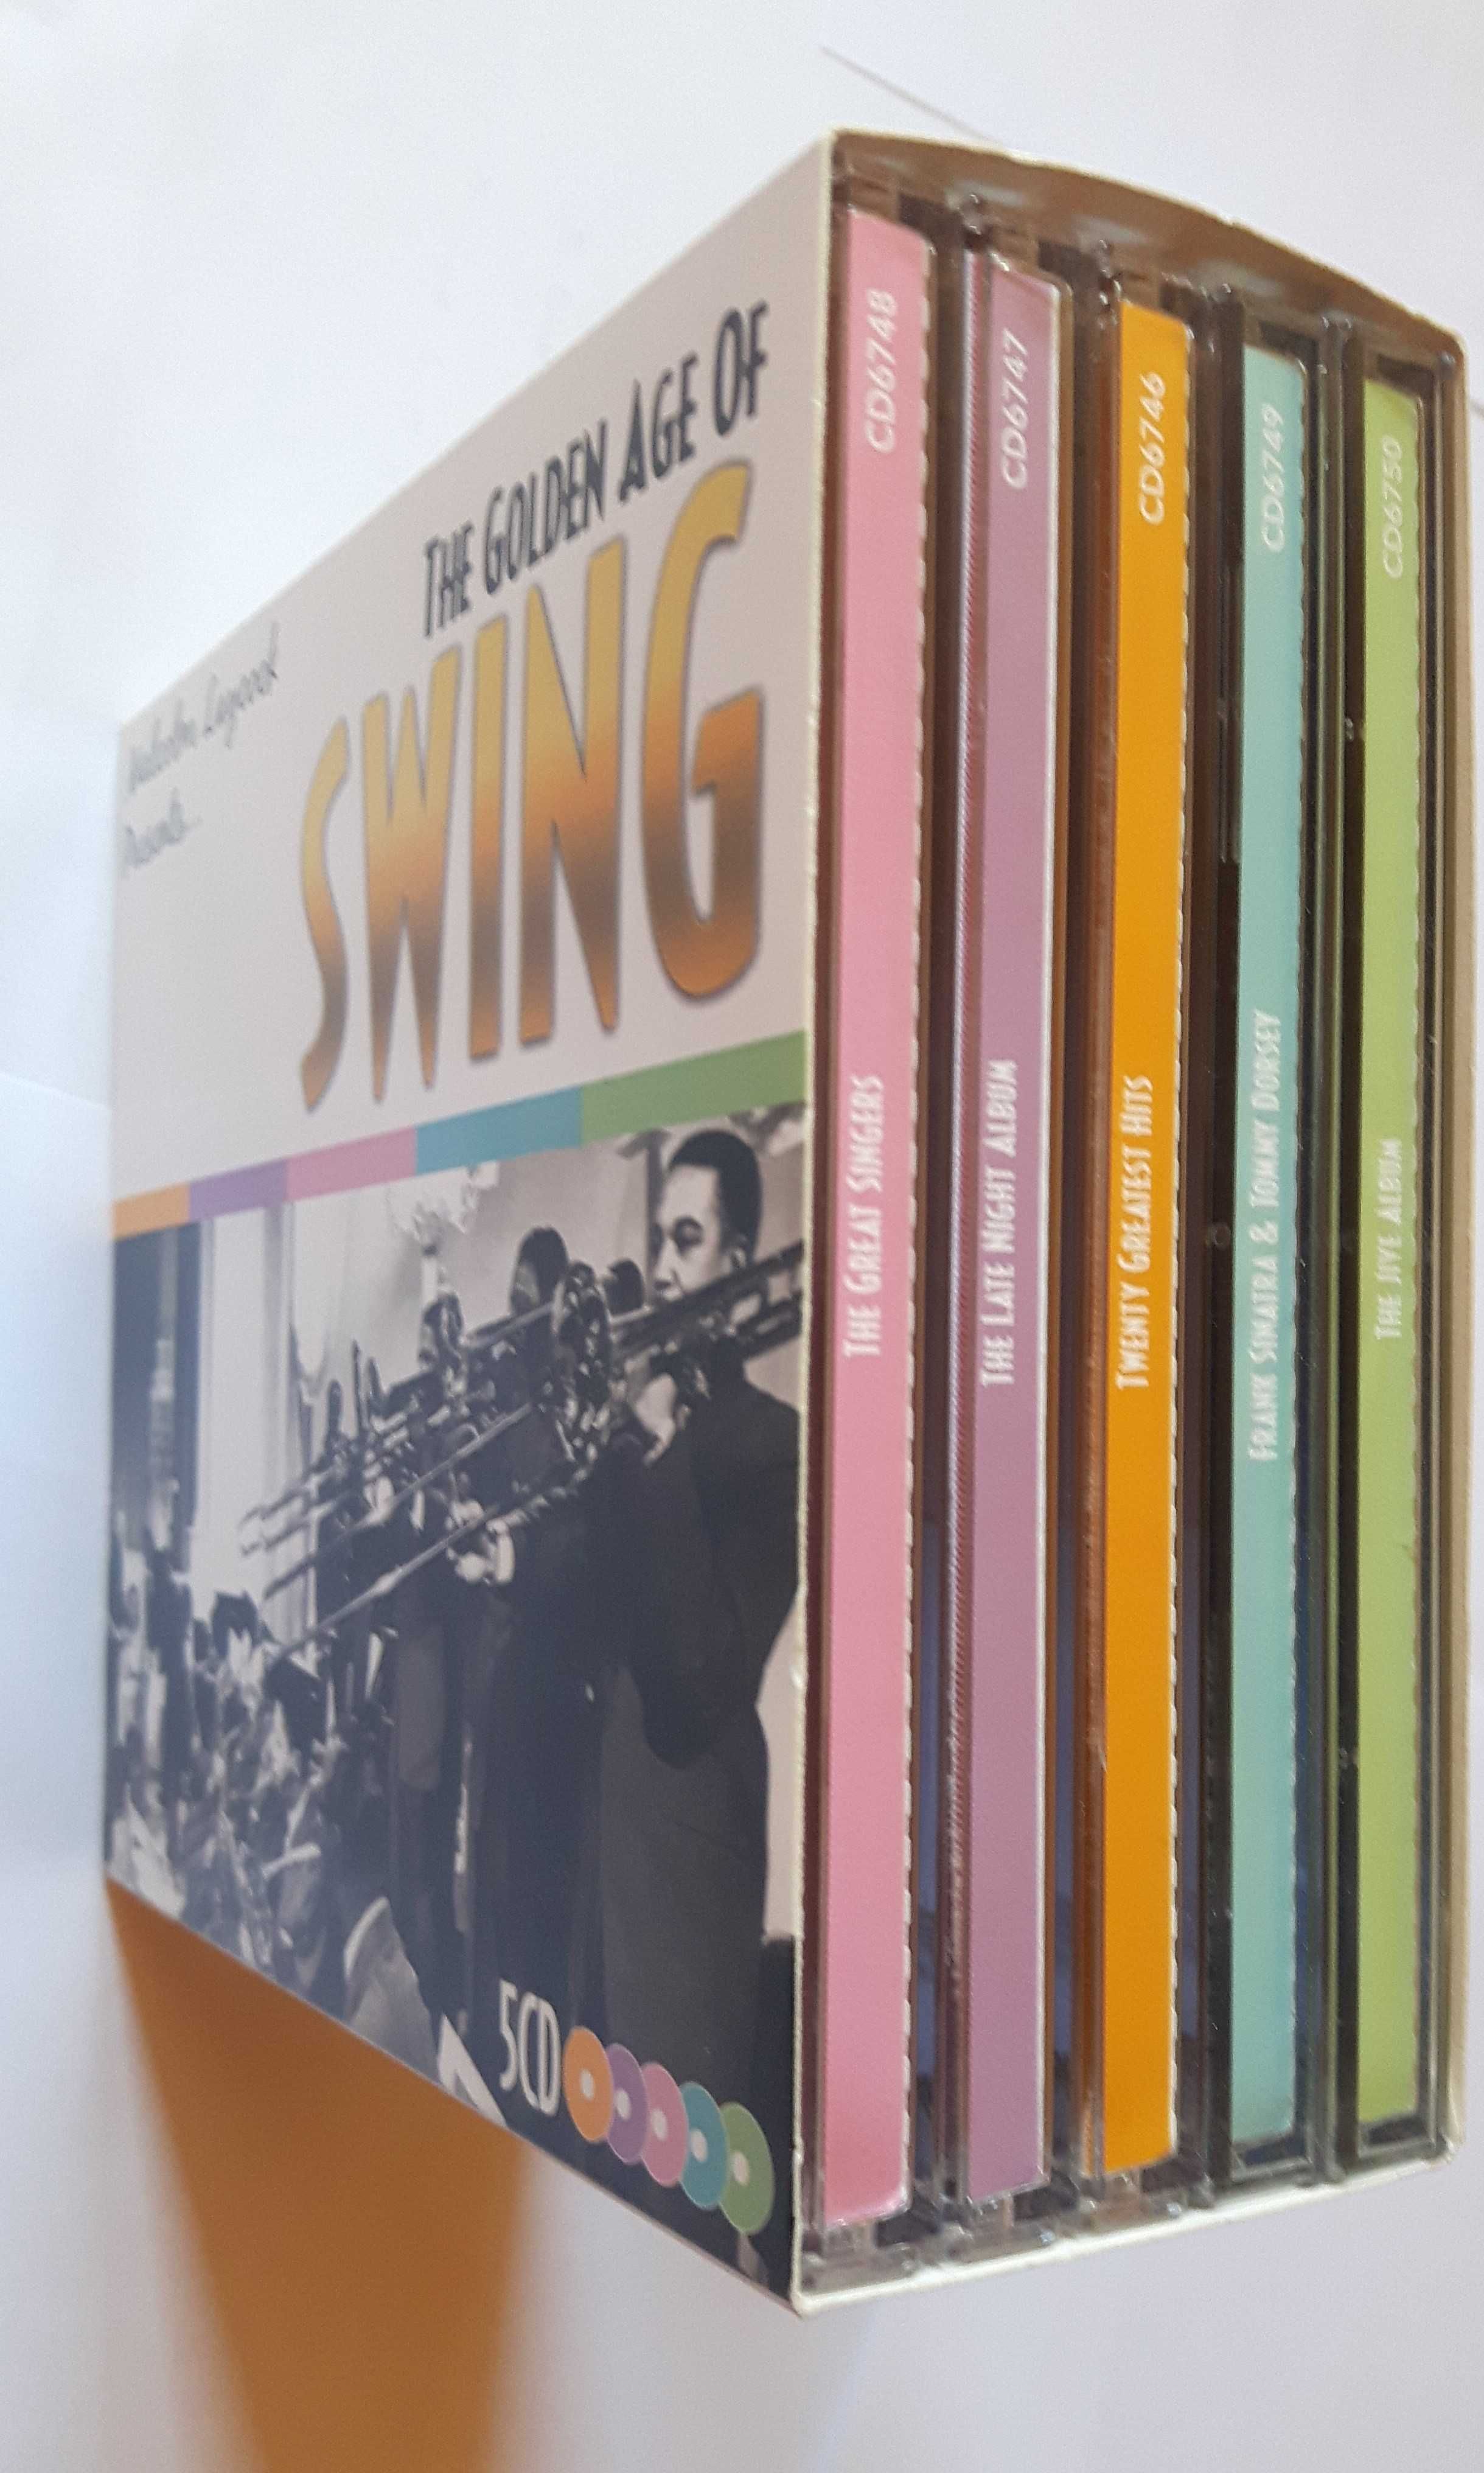 The Golden Age of Swing 5 CD Sinatra Glen Miller Count Basie